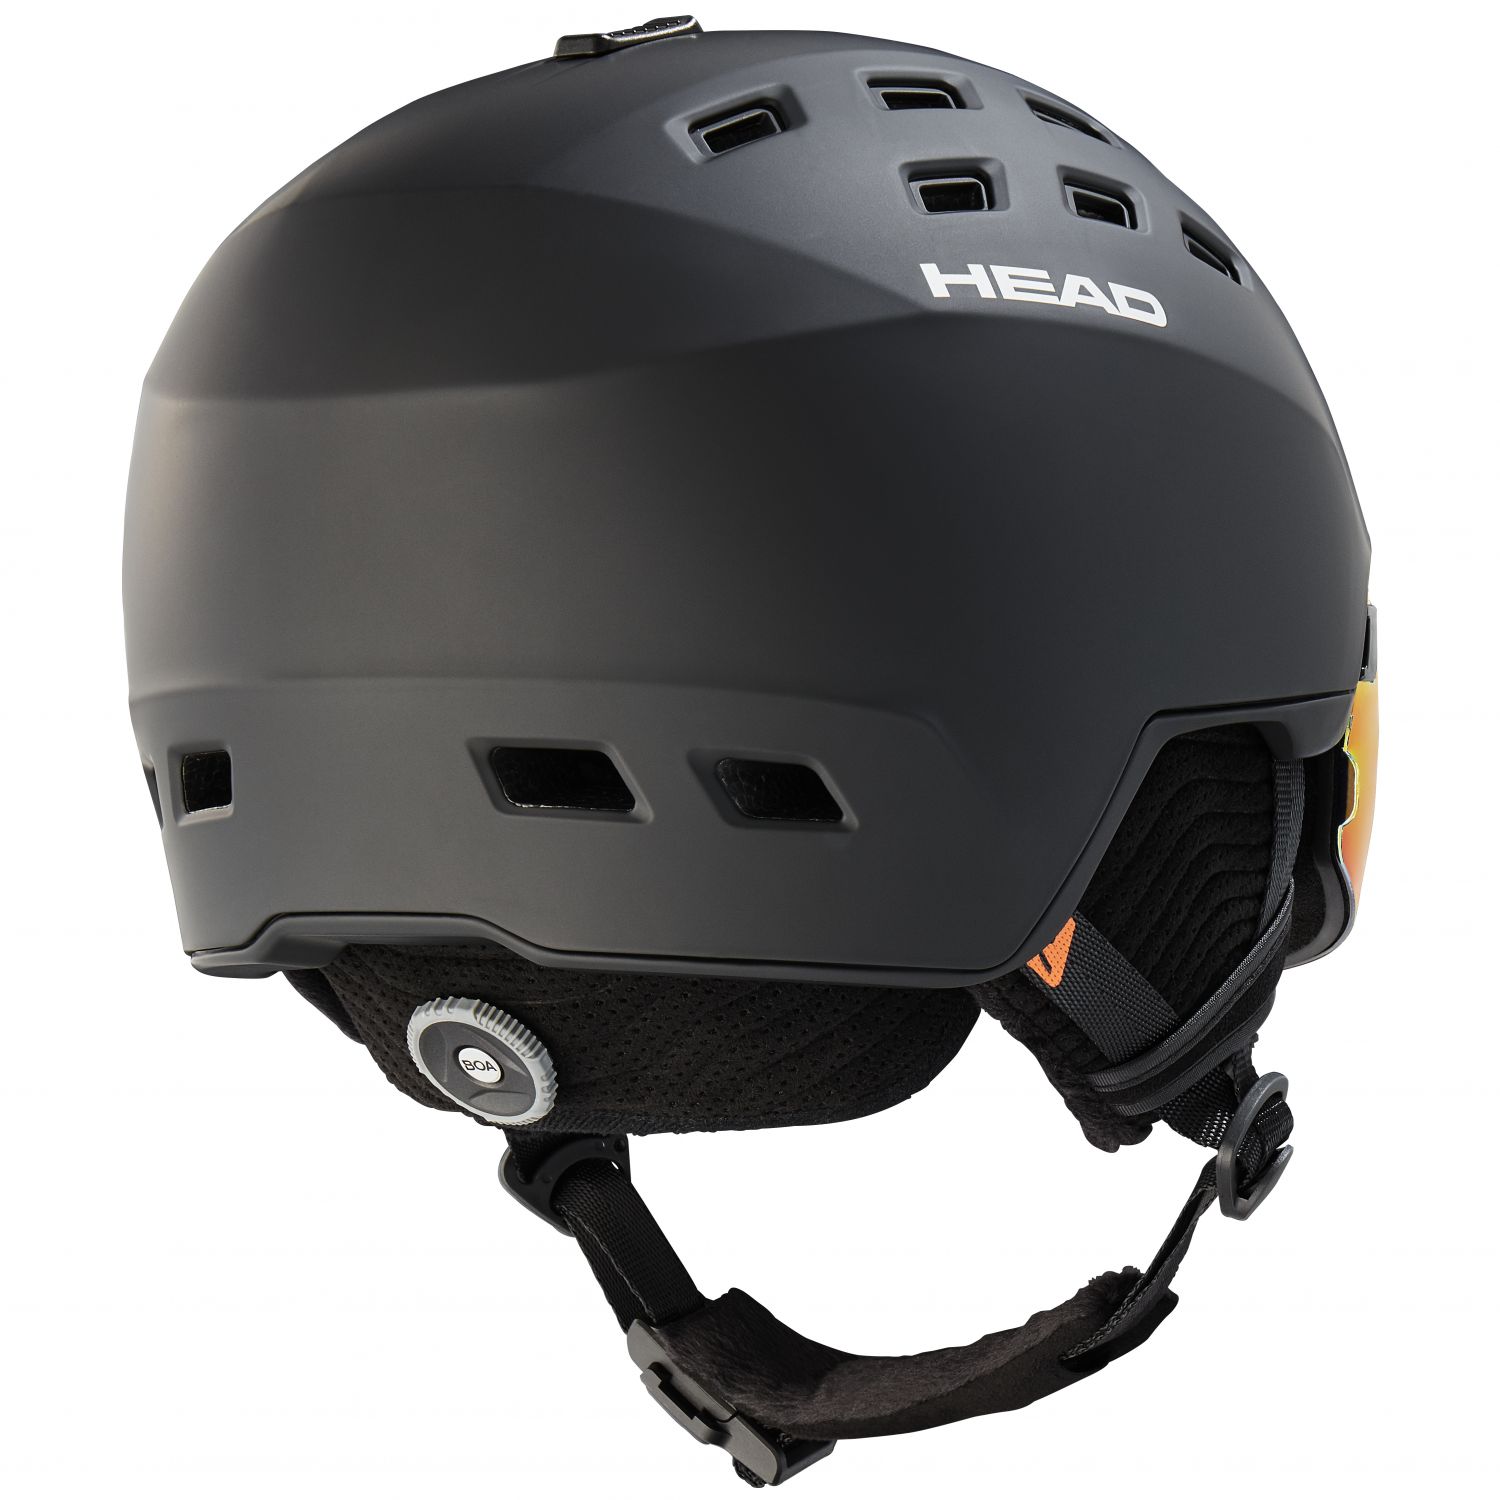 Head Radar 5K Pola, ski helm met vizier, zwart